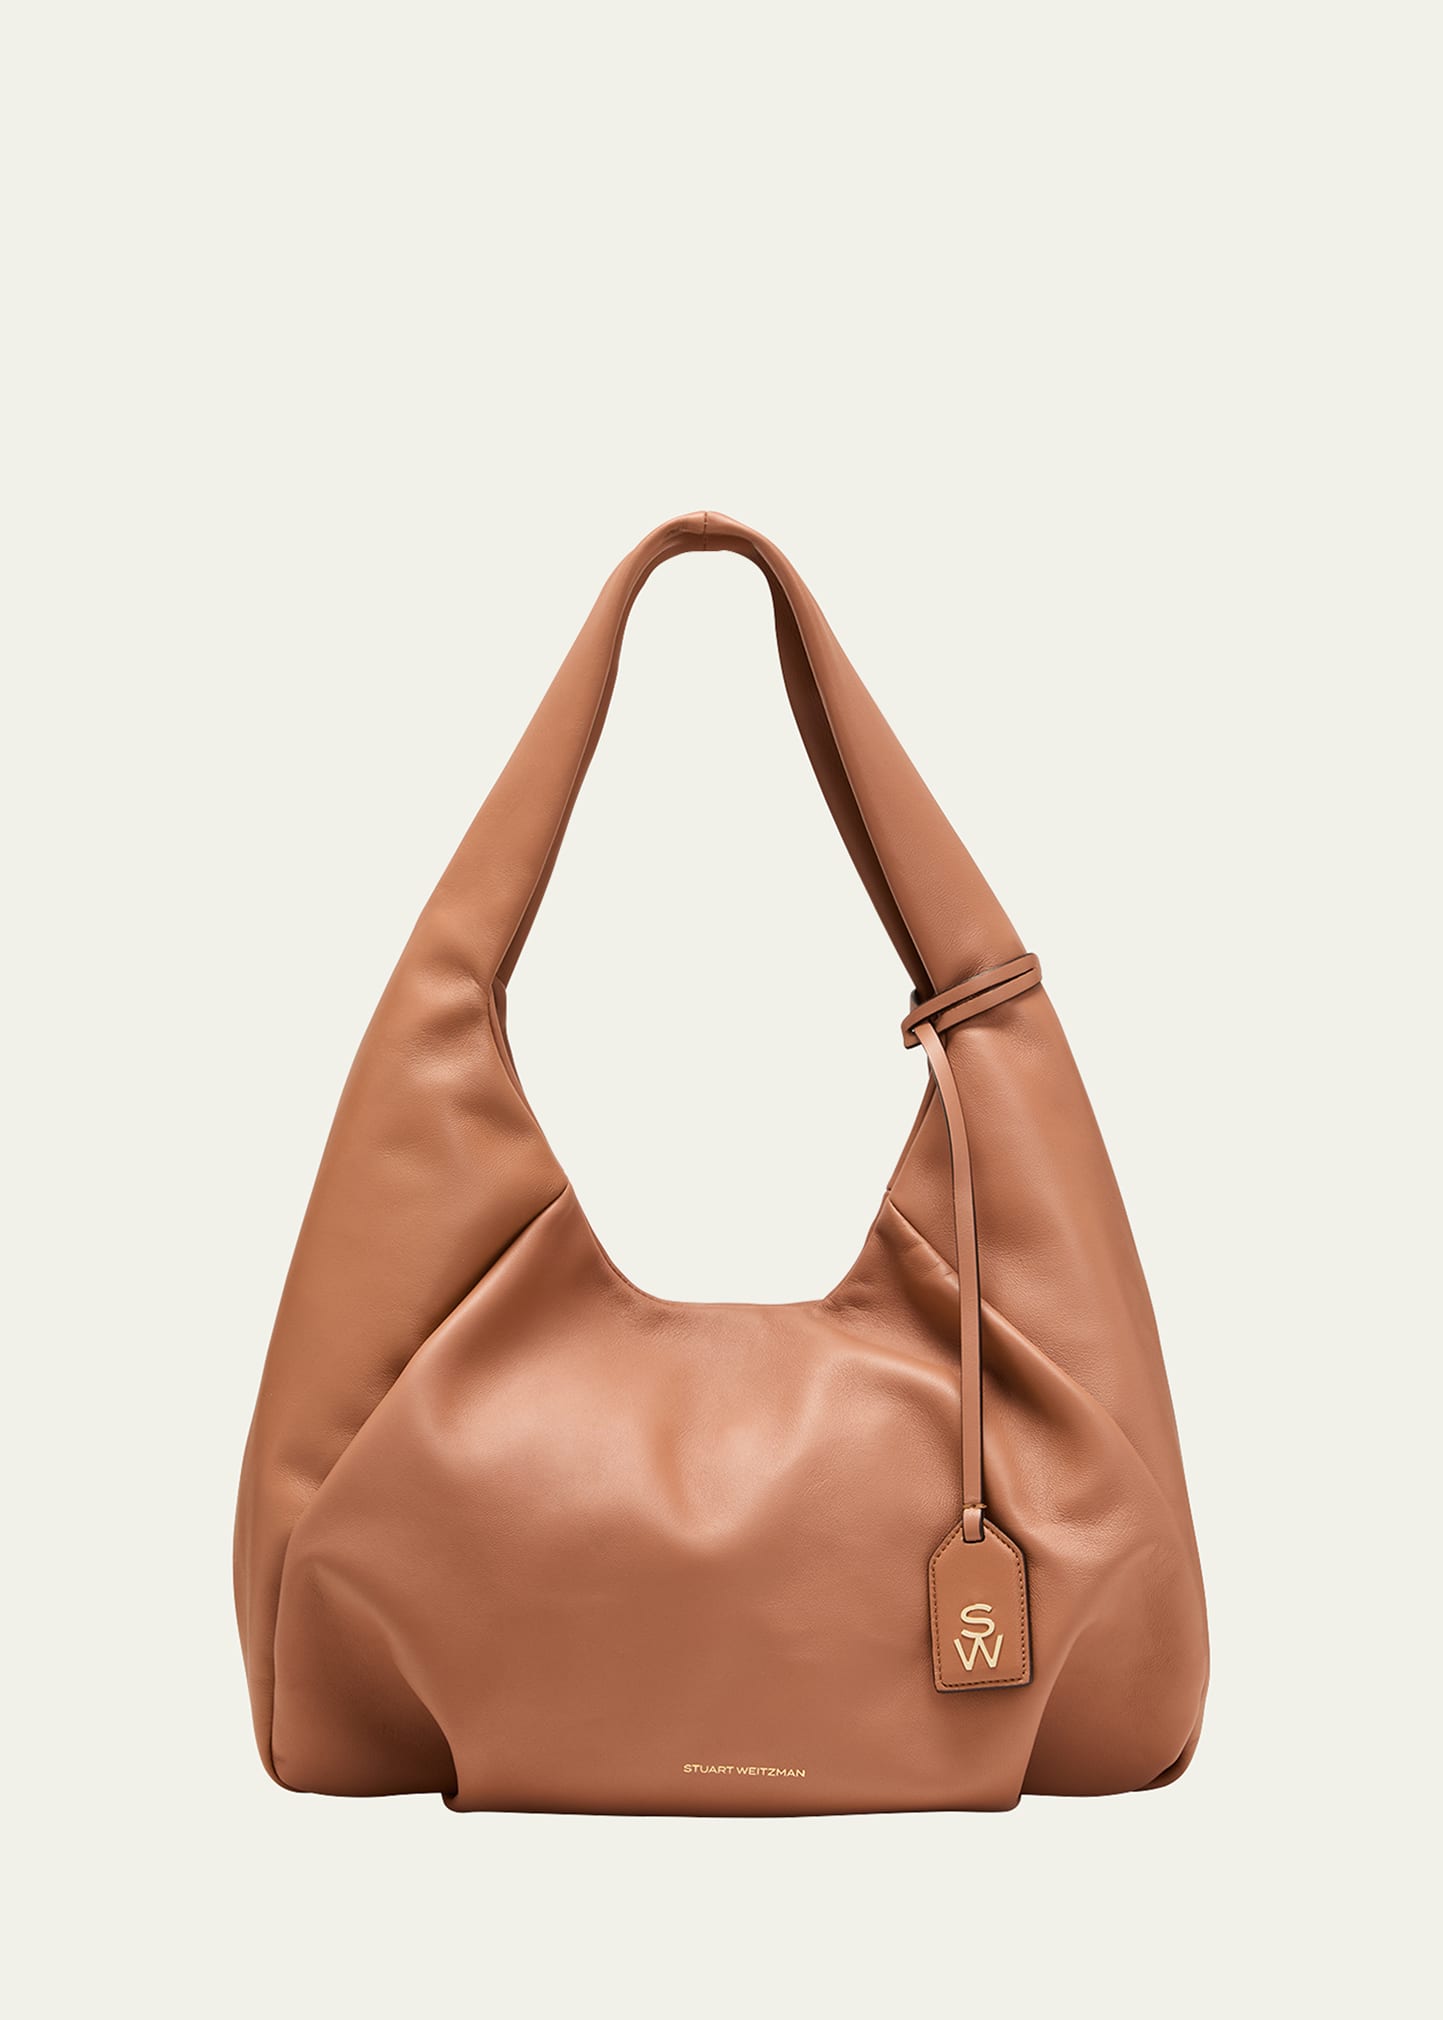 The Moda Napa Leather Hobo Bag